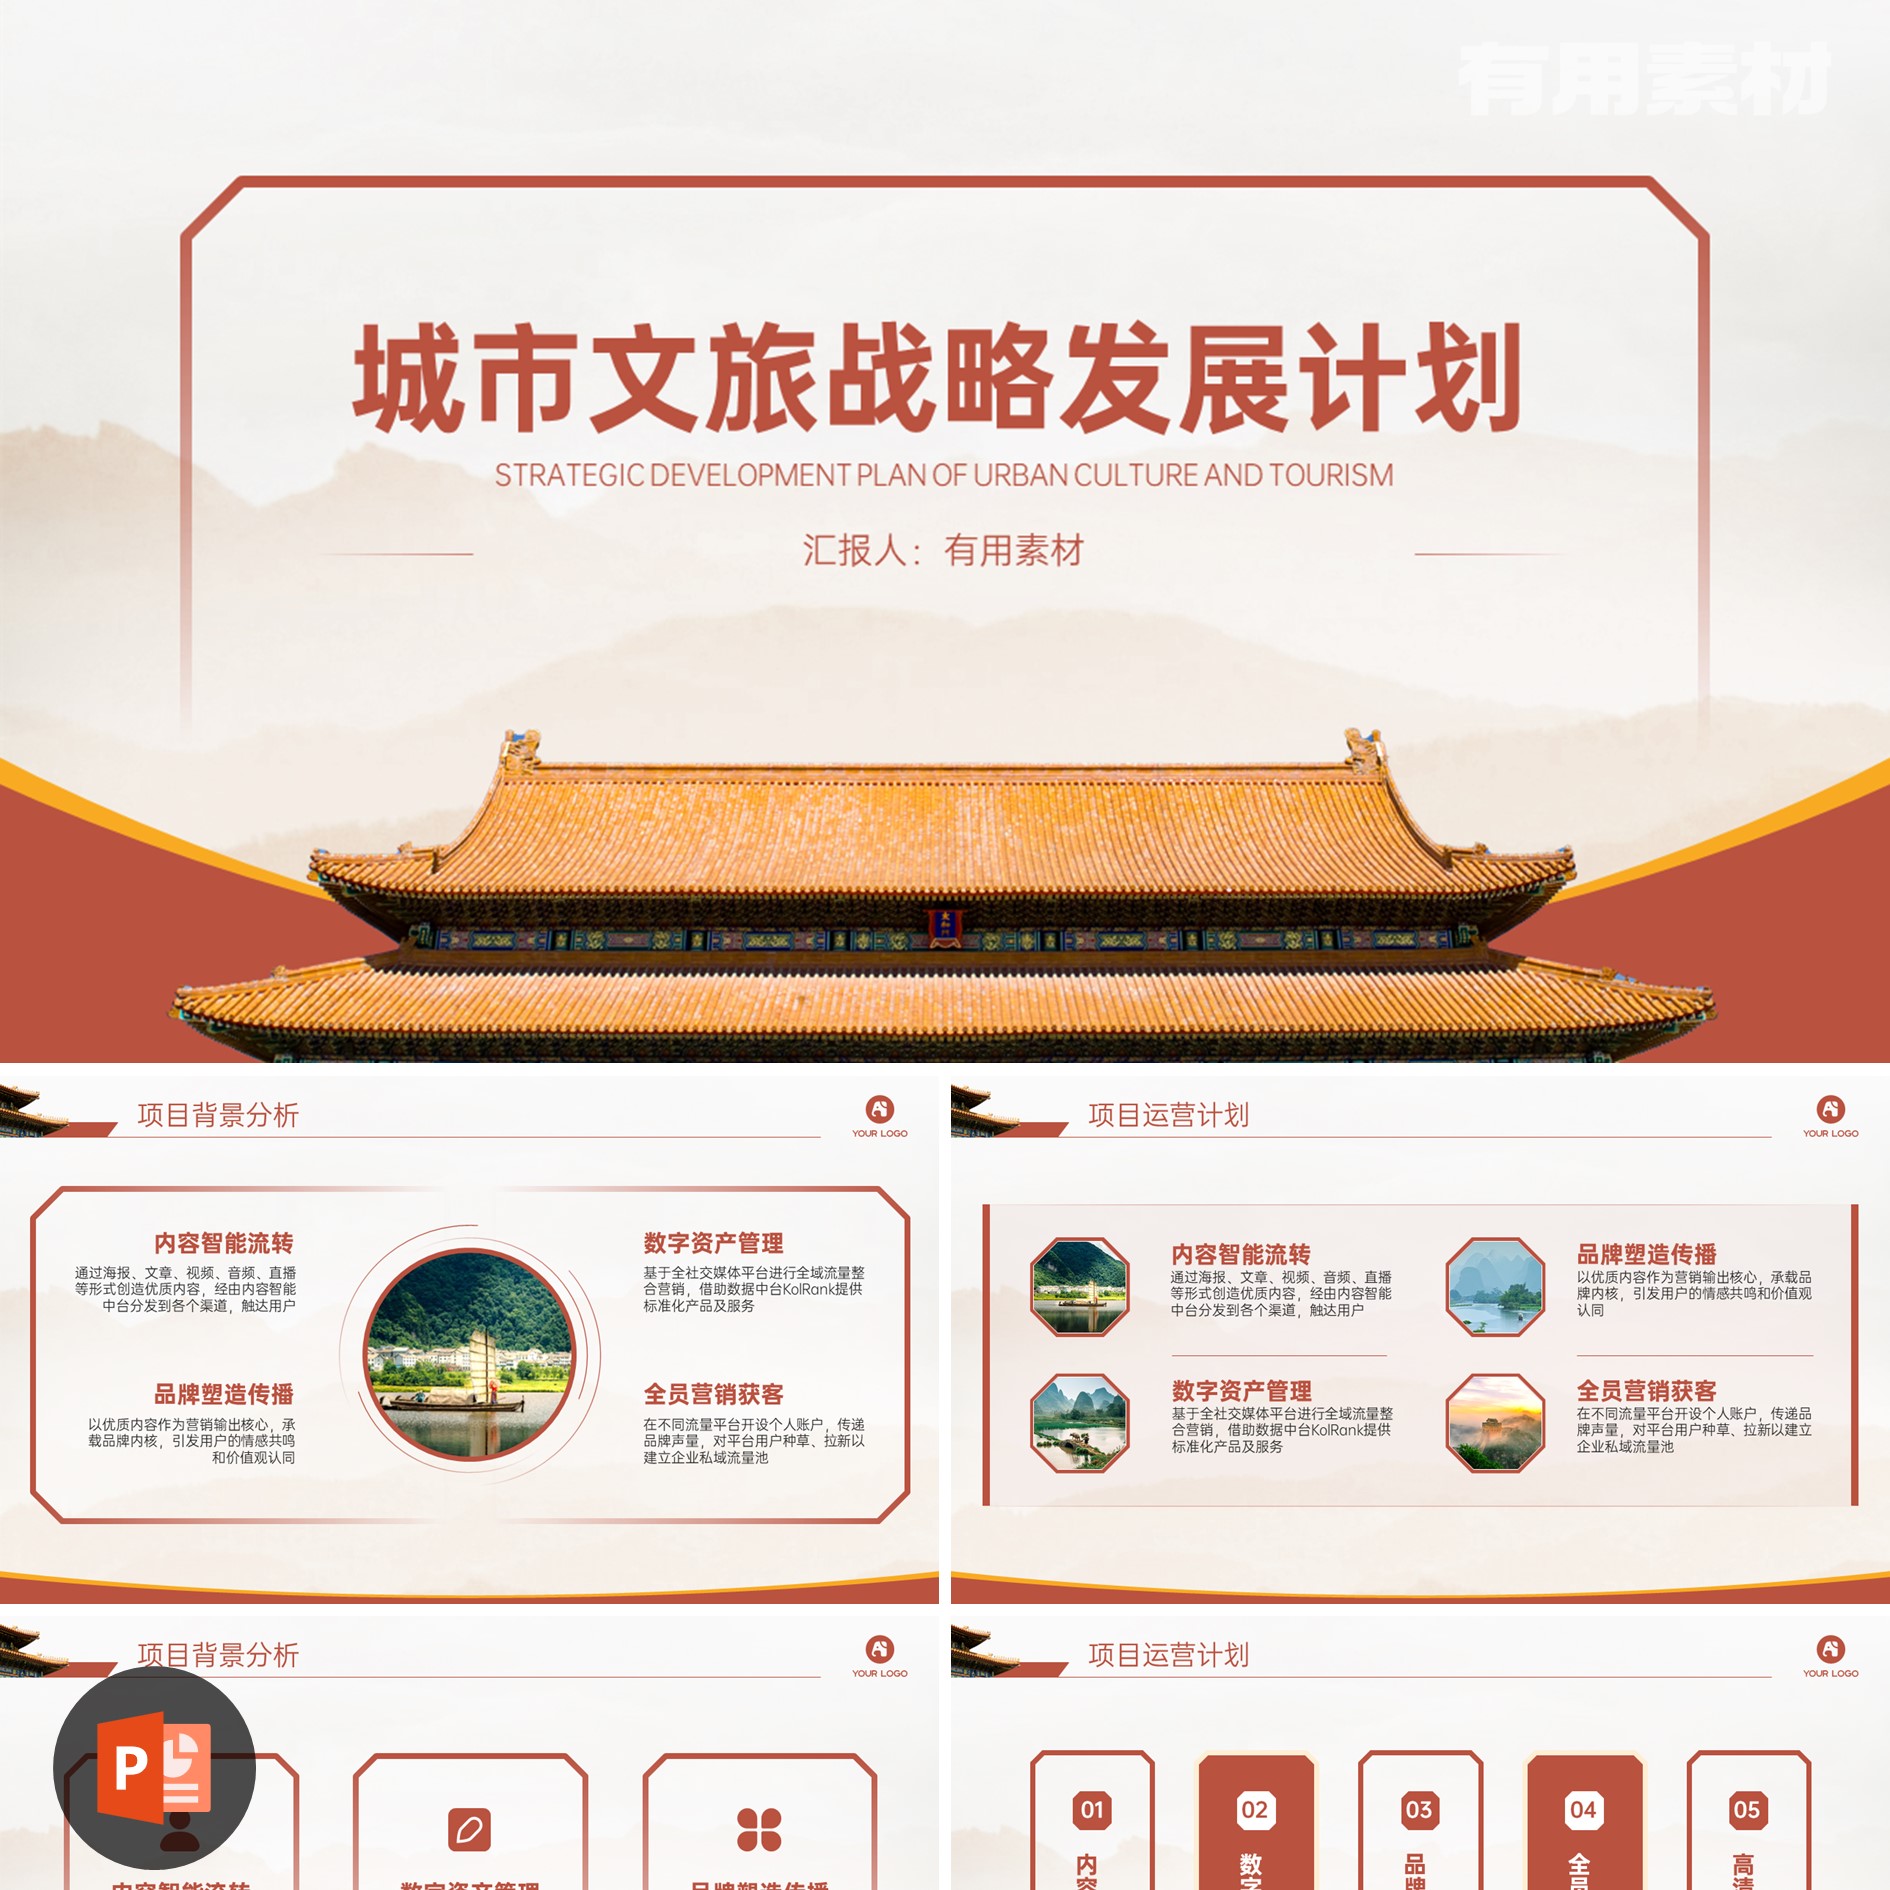 【PPT-069】23页红色中国风城市文旅战略发展计划逻辑图例PPT模板